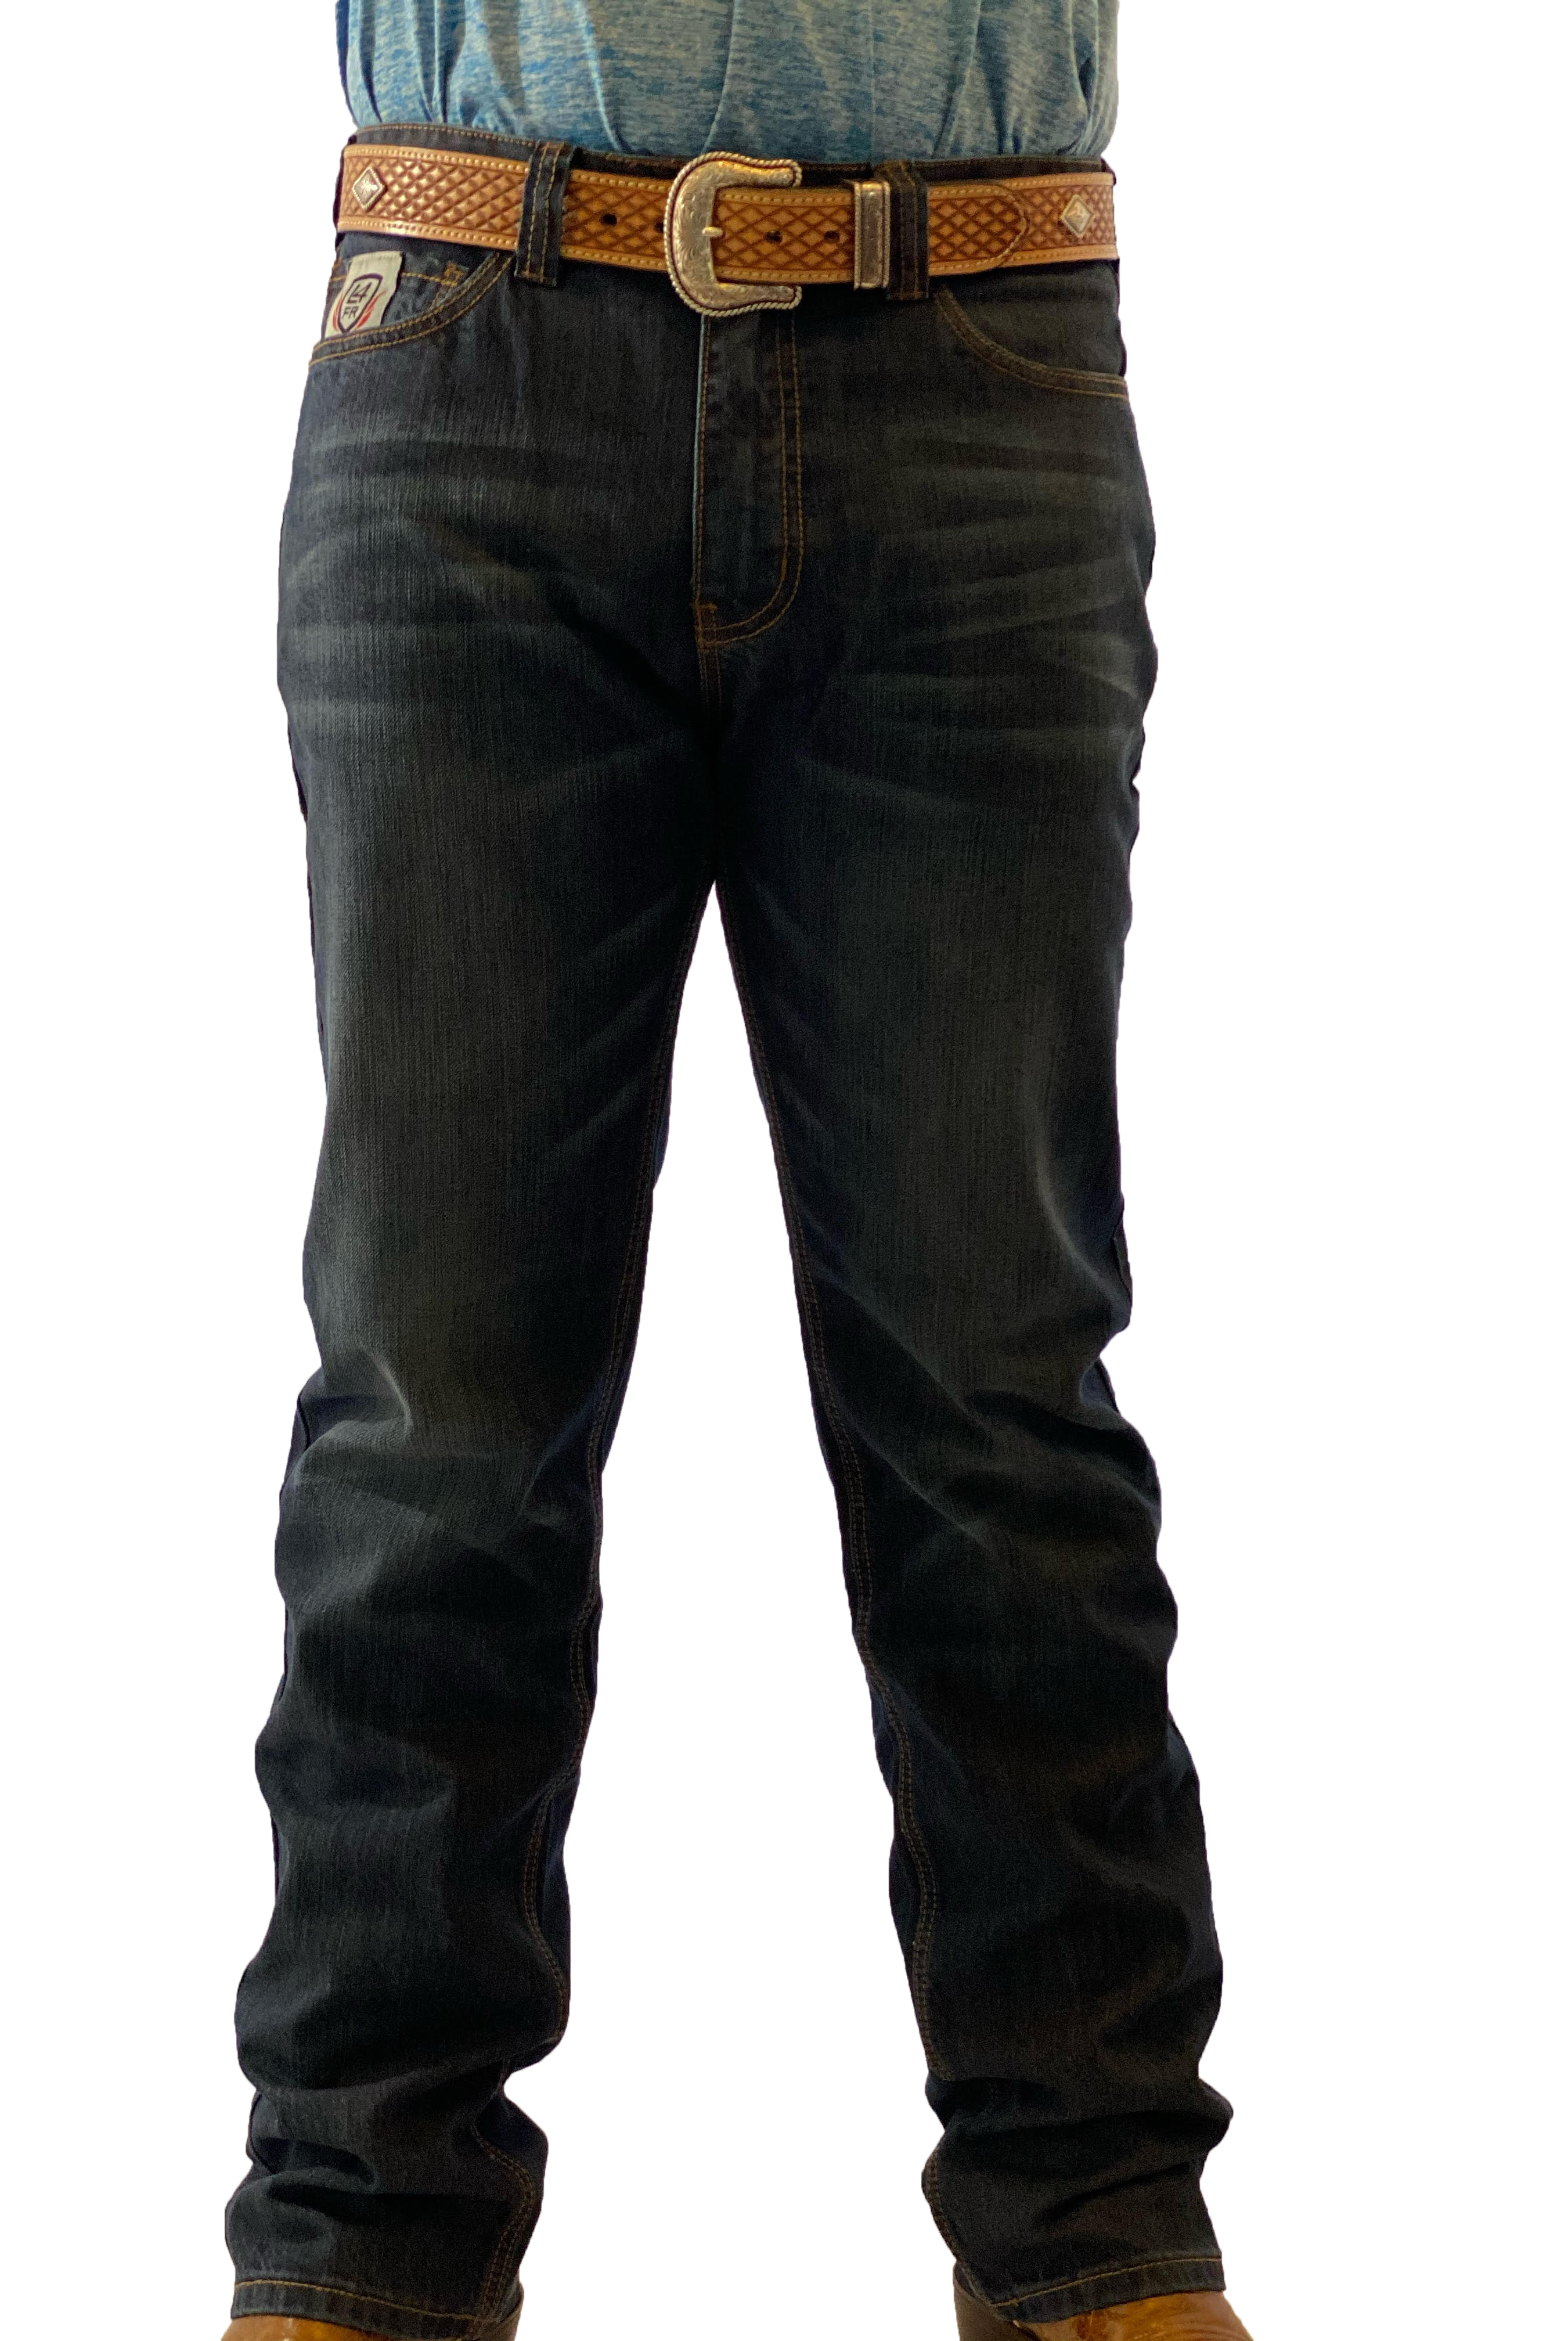 A man in B1 boot cut jeans